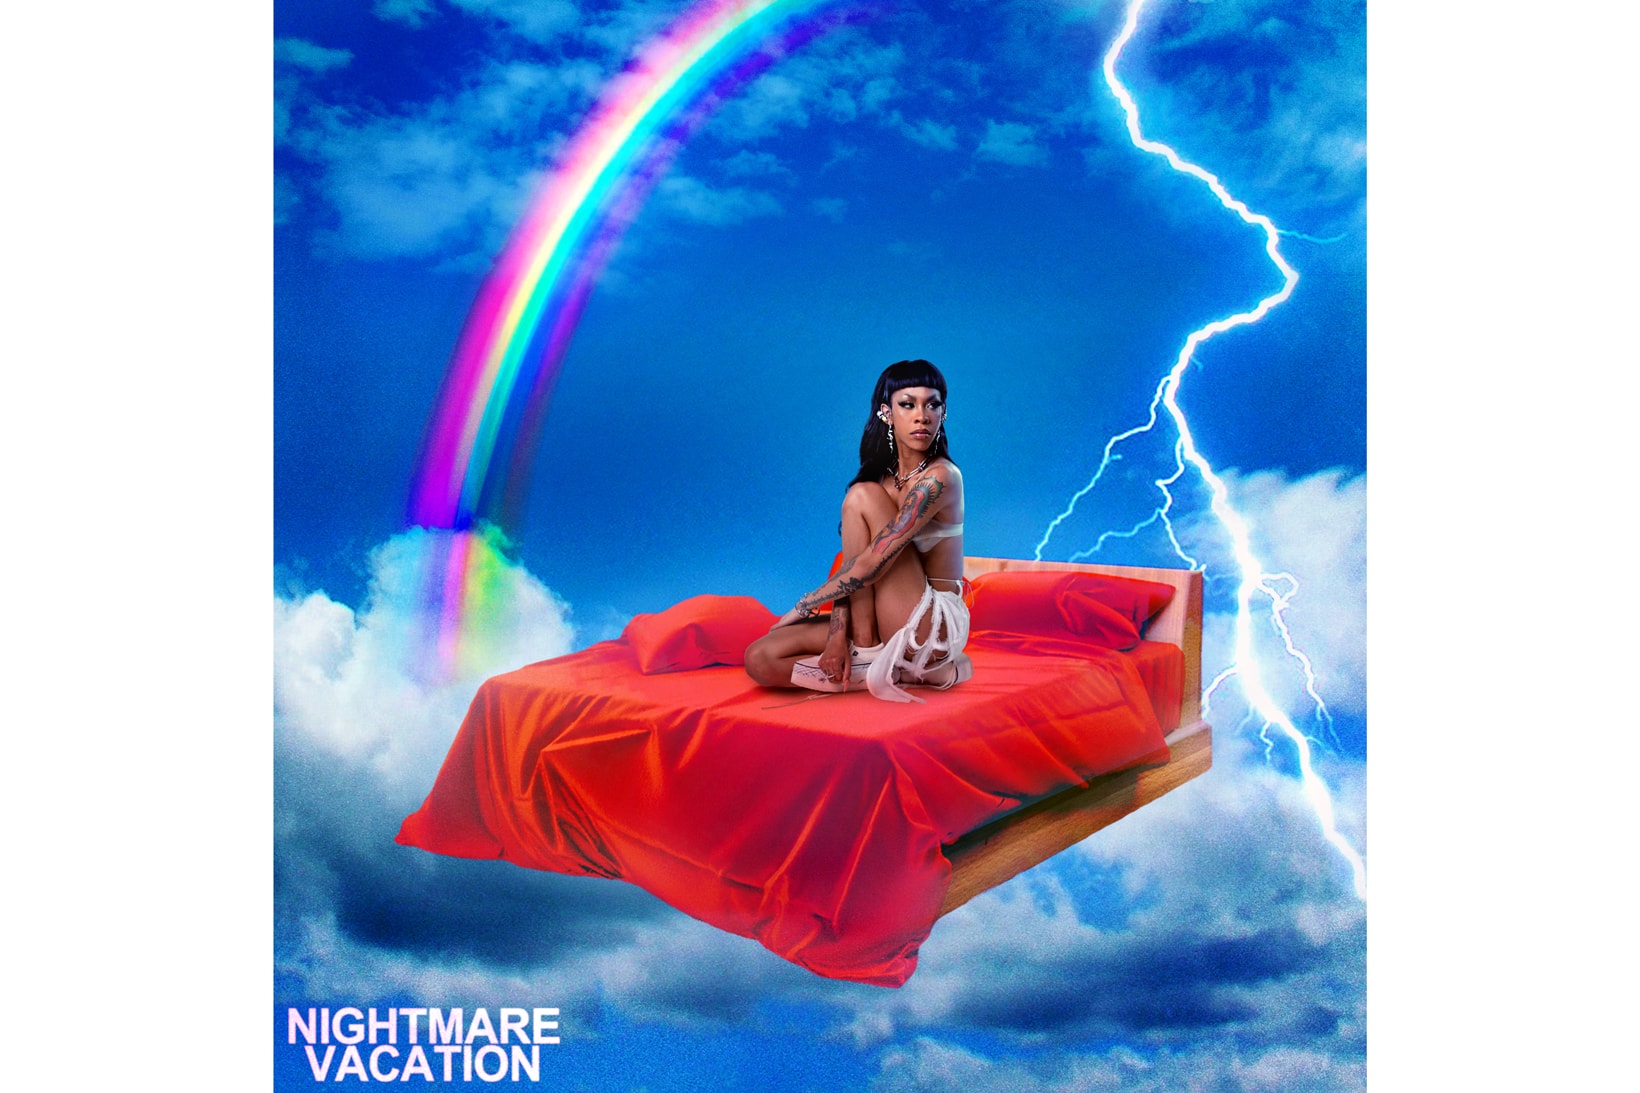 Rico Nasty Nightmare Vacation Album Cover Art